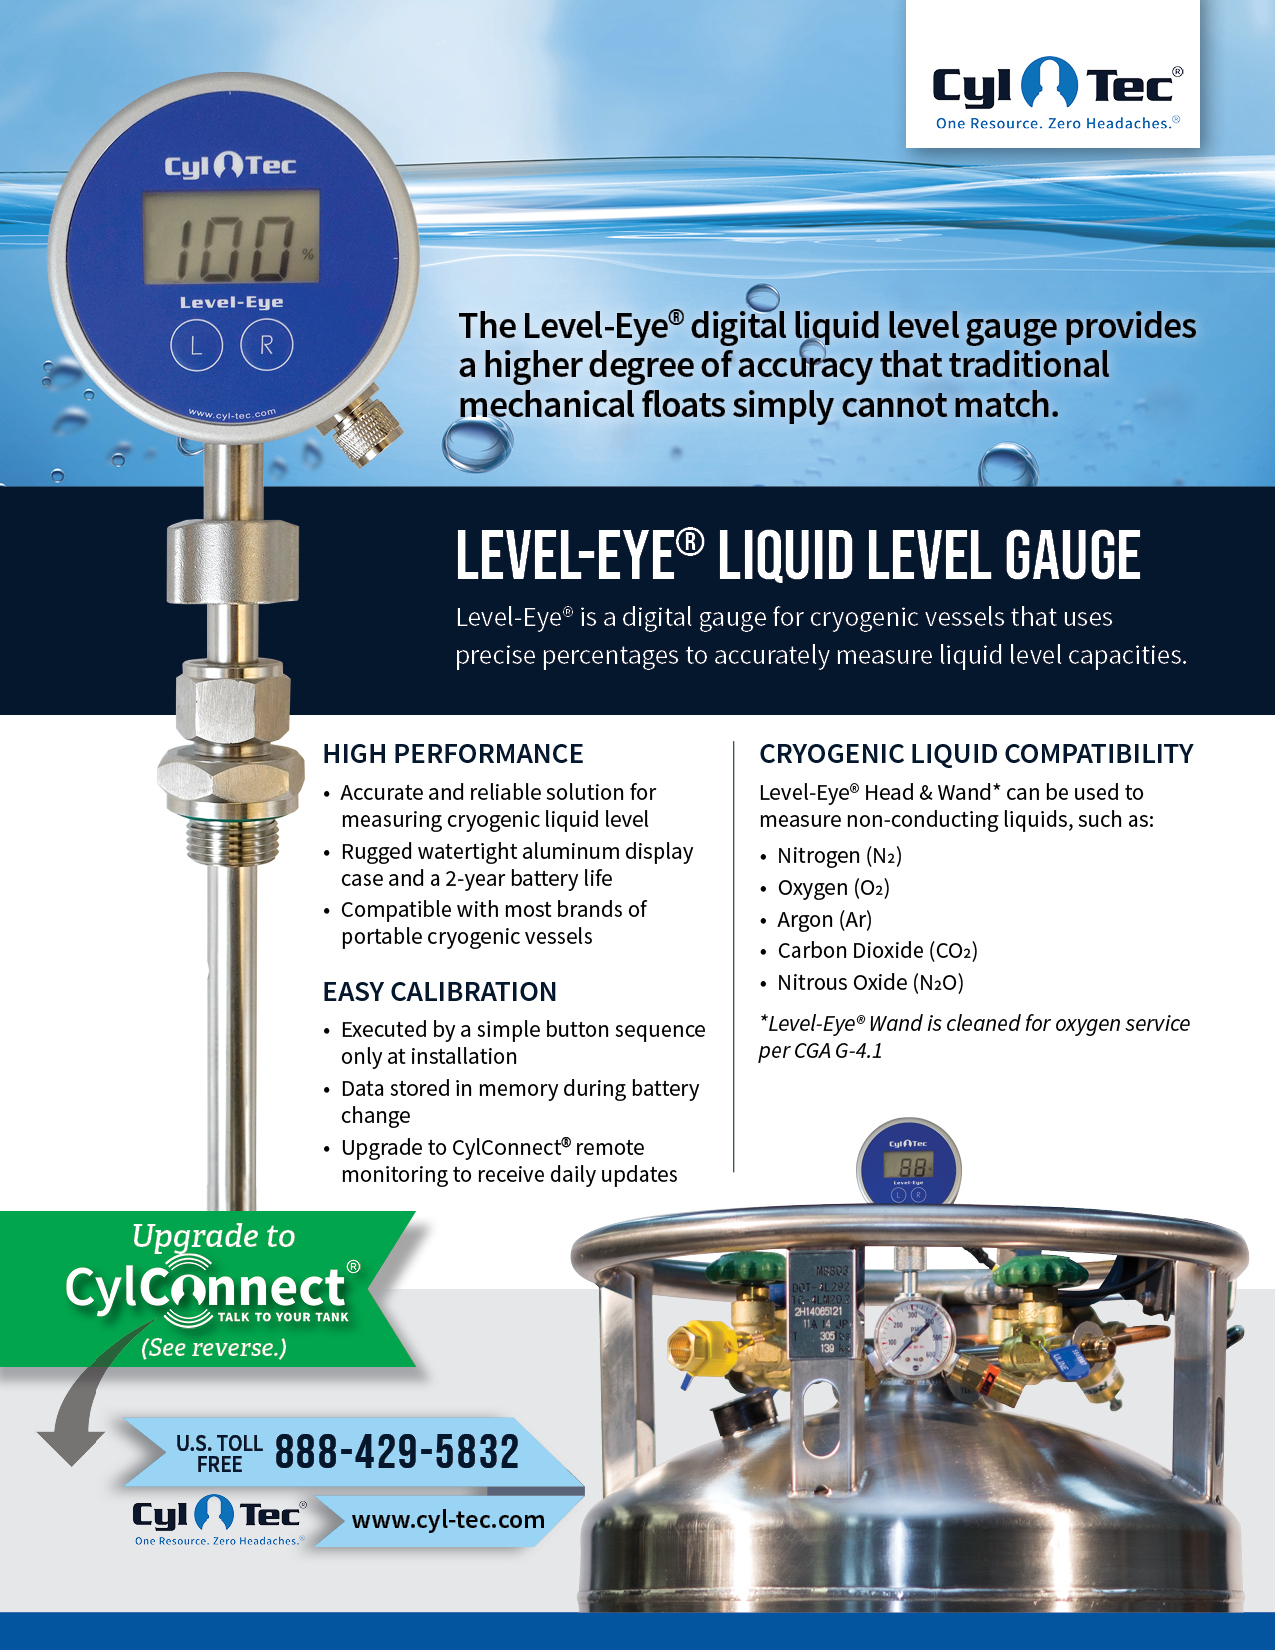 CylTec Level-Eye Liquid Level Gauge